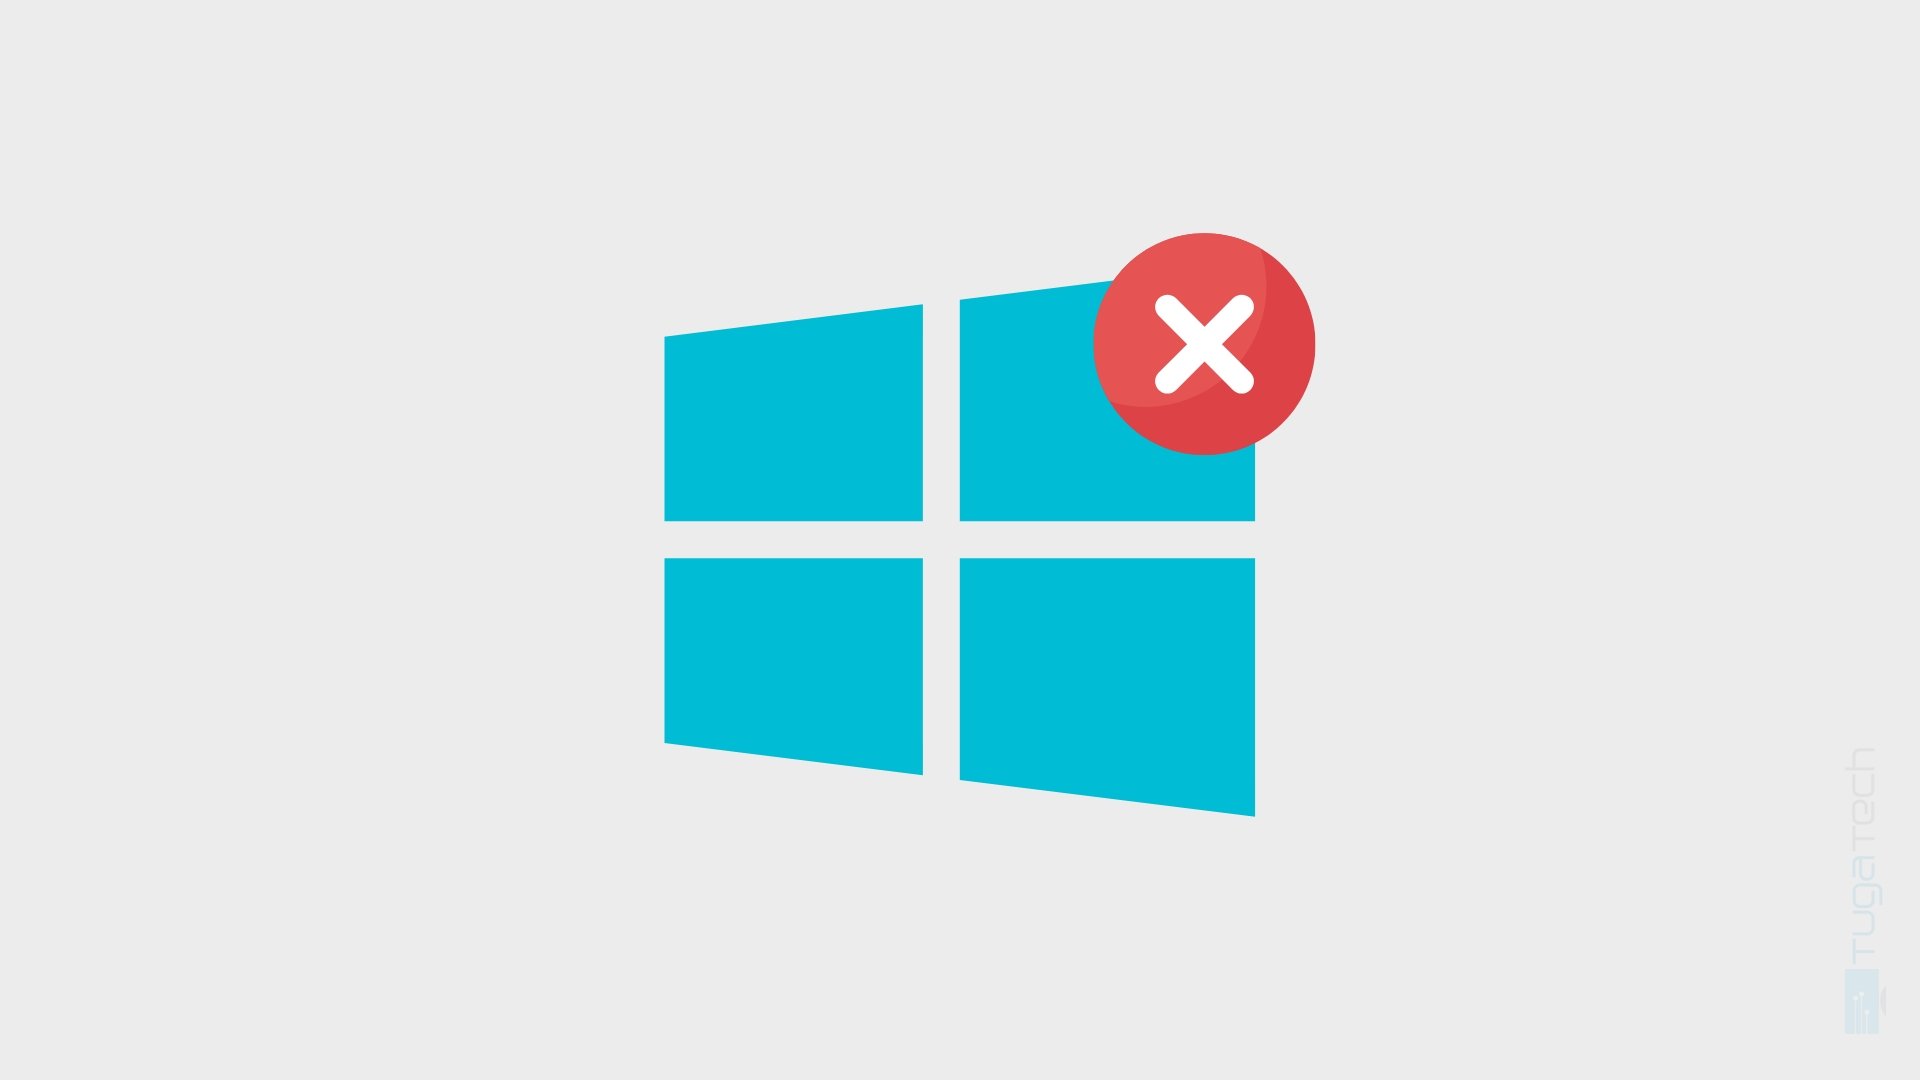 Error in Windows 10